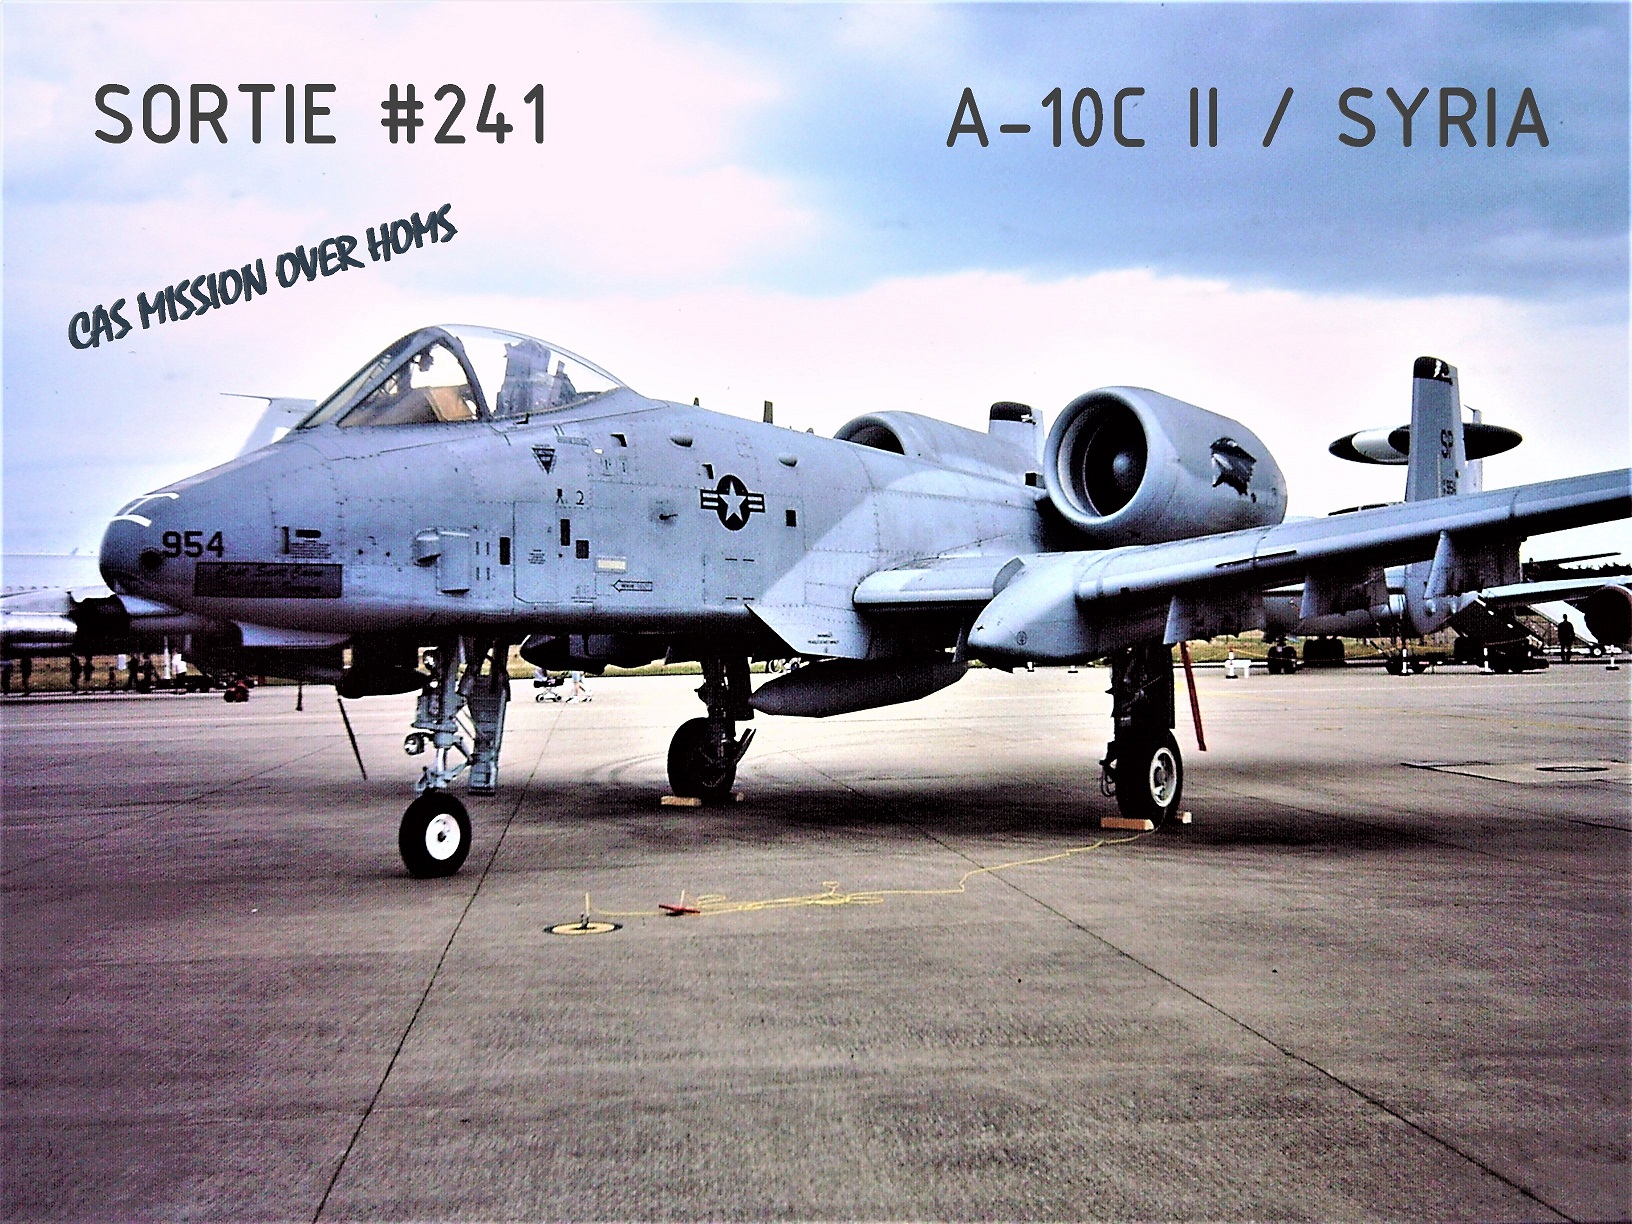 SORTIE 241: CAS over Homs - A-10C II - Syria